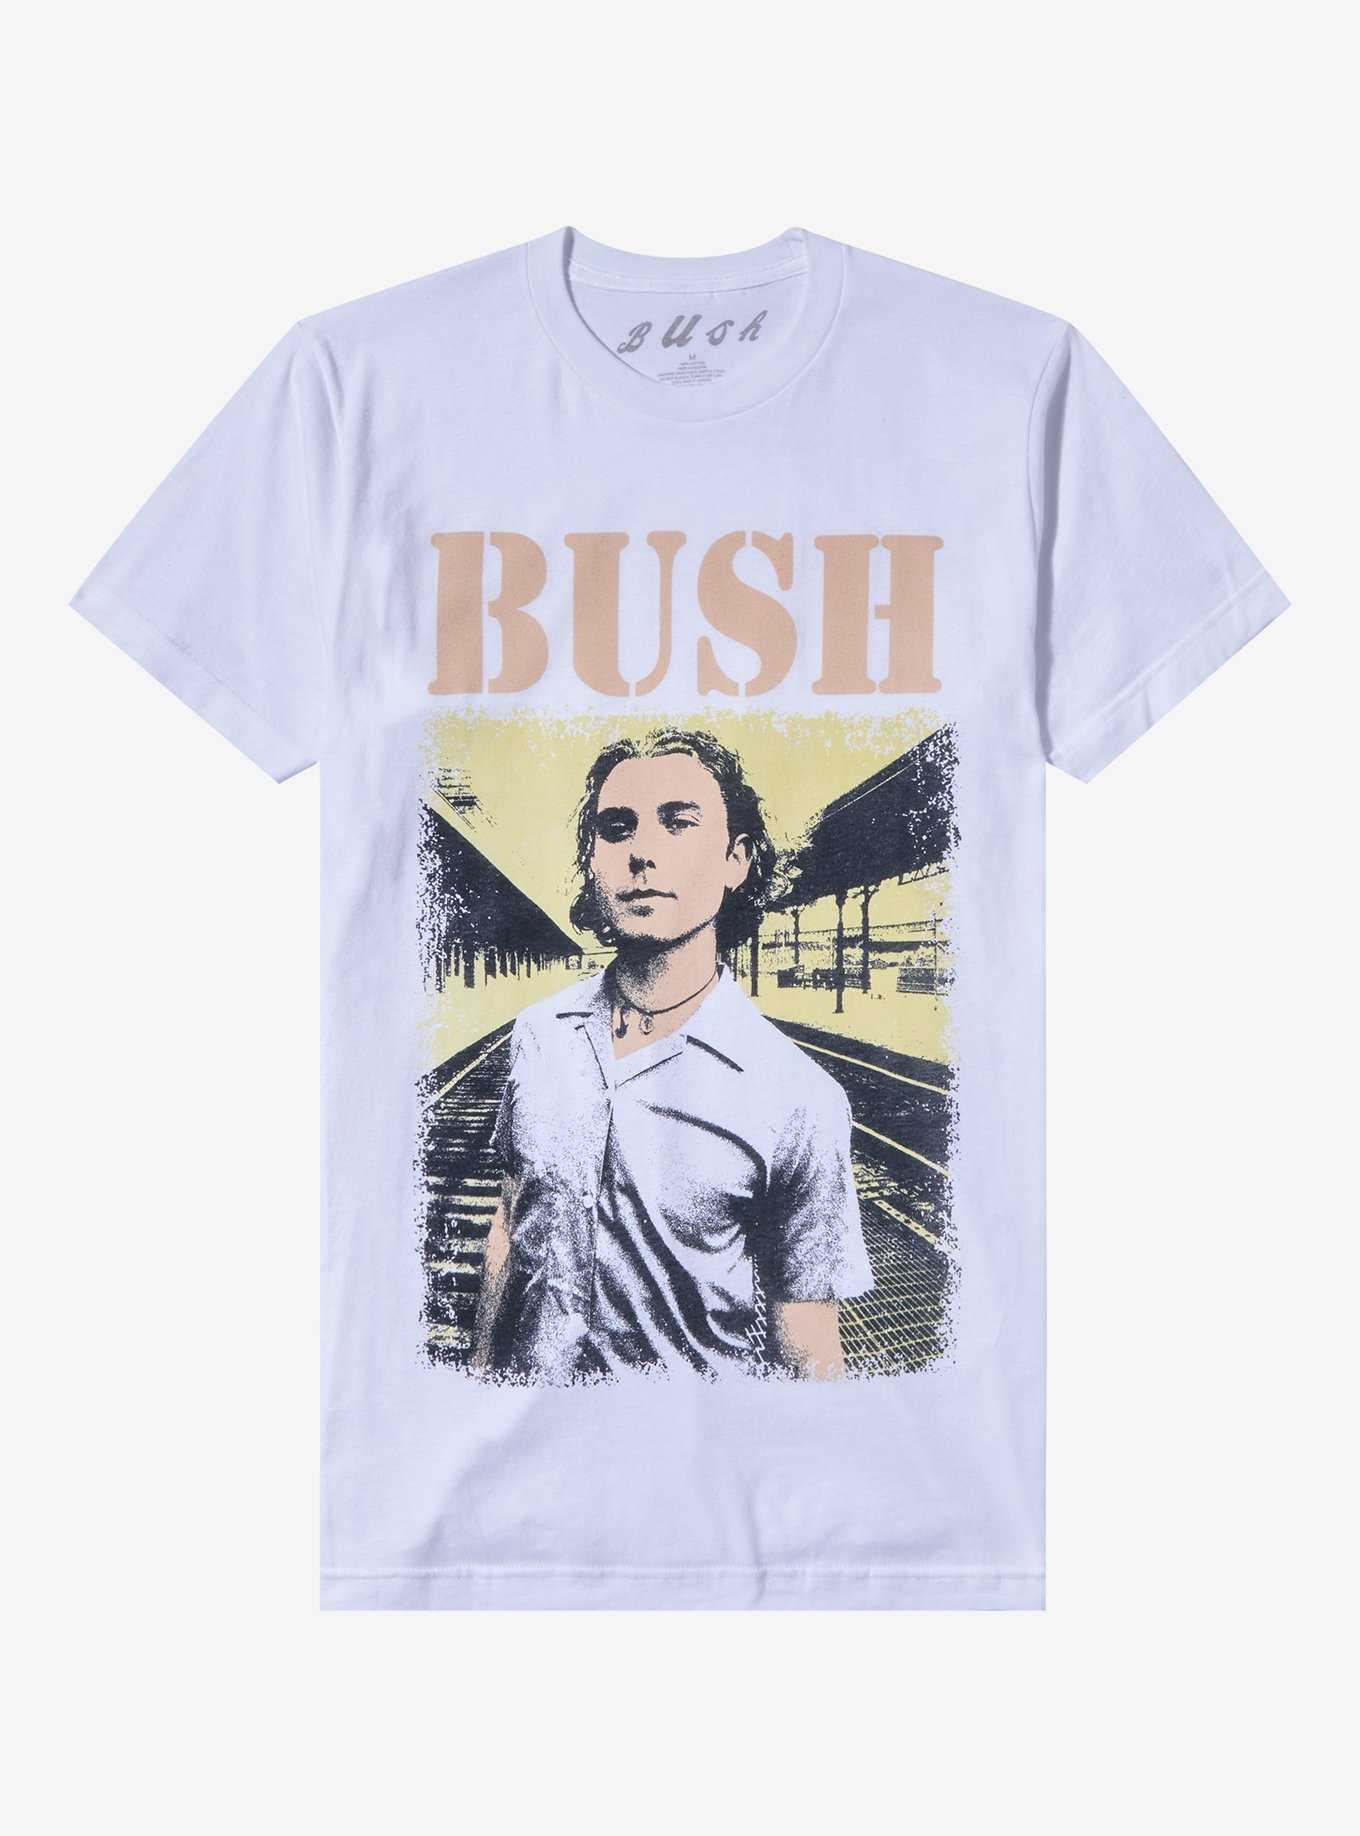 Bush Gavin Rossdale Pastel Boyfriend Fit Girls T-Shirt, , hi-res